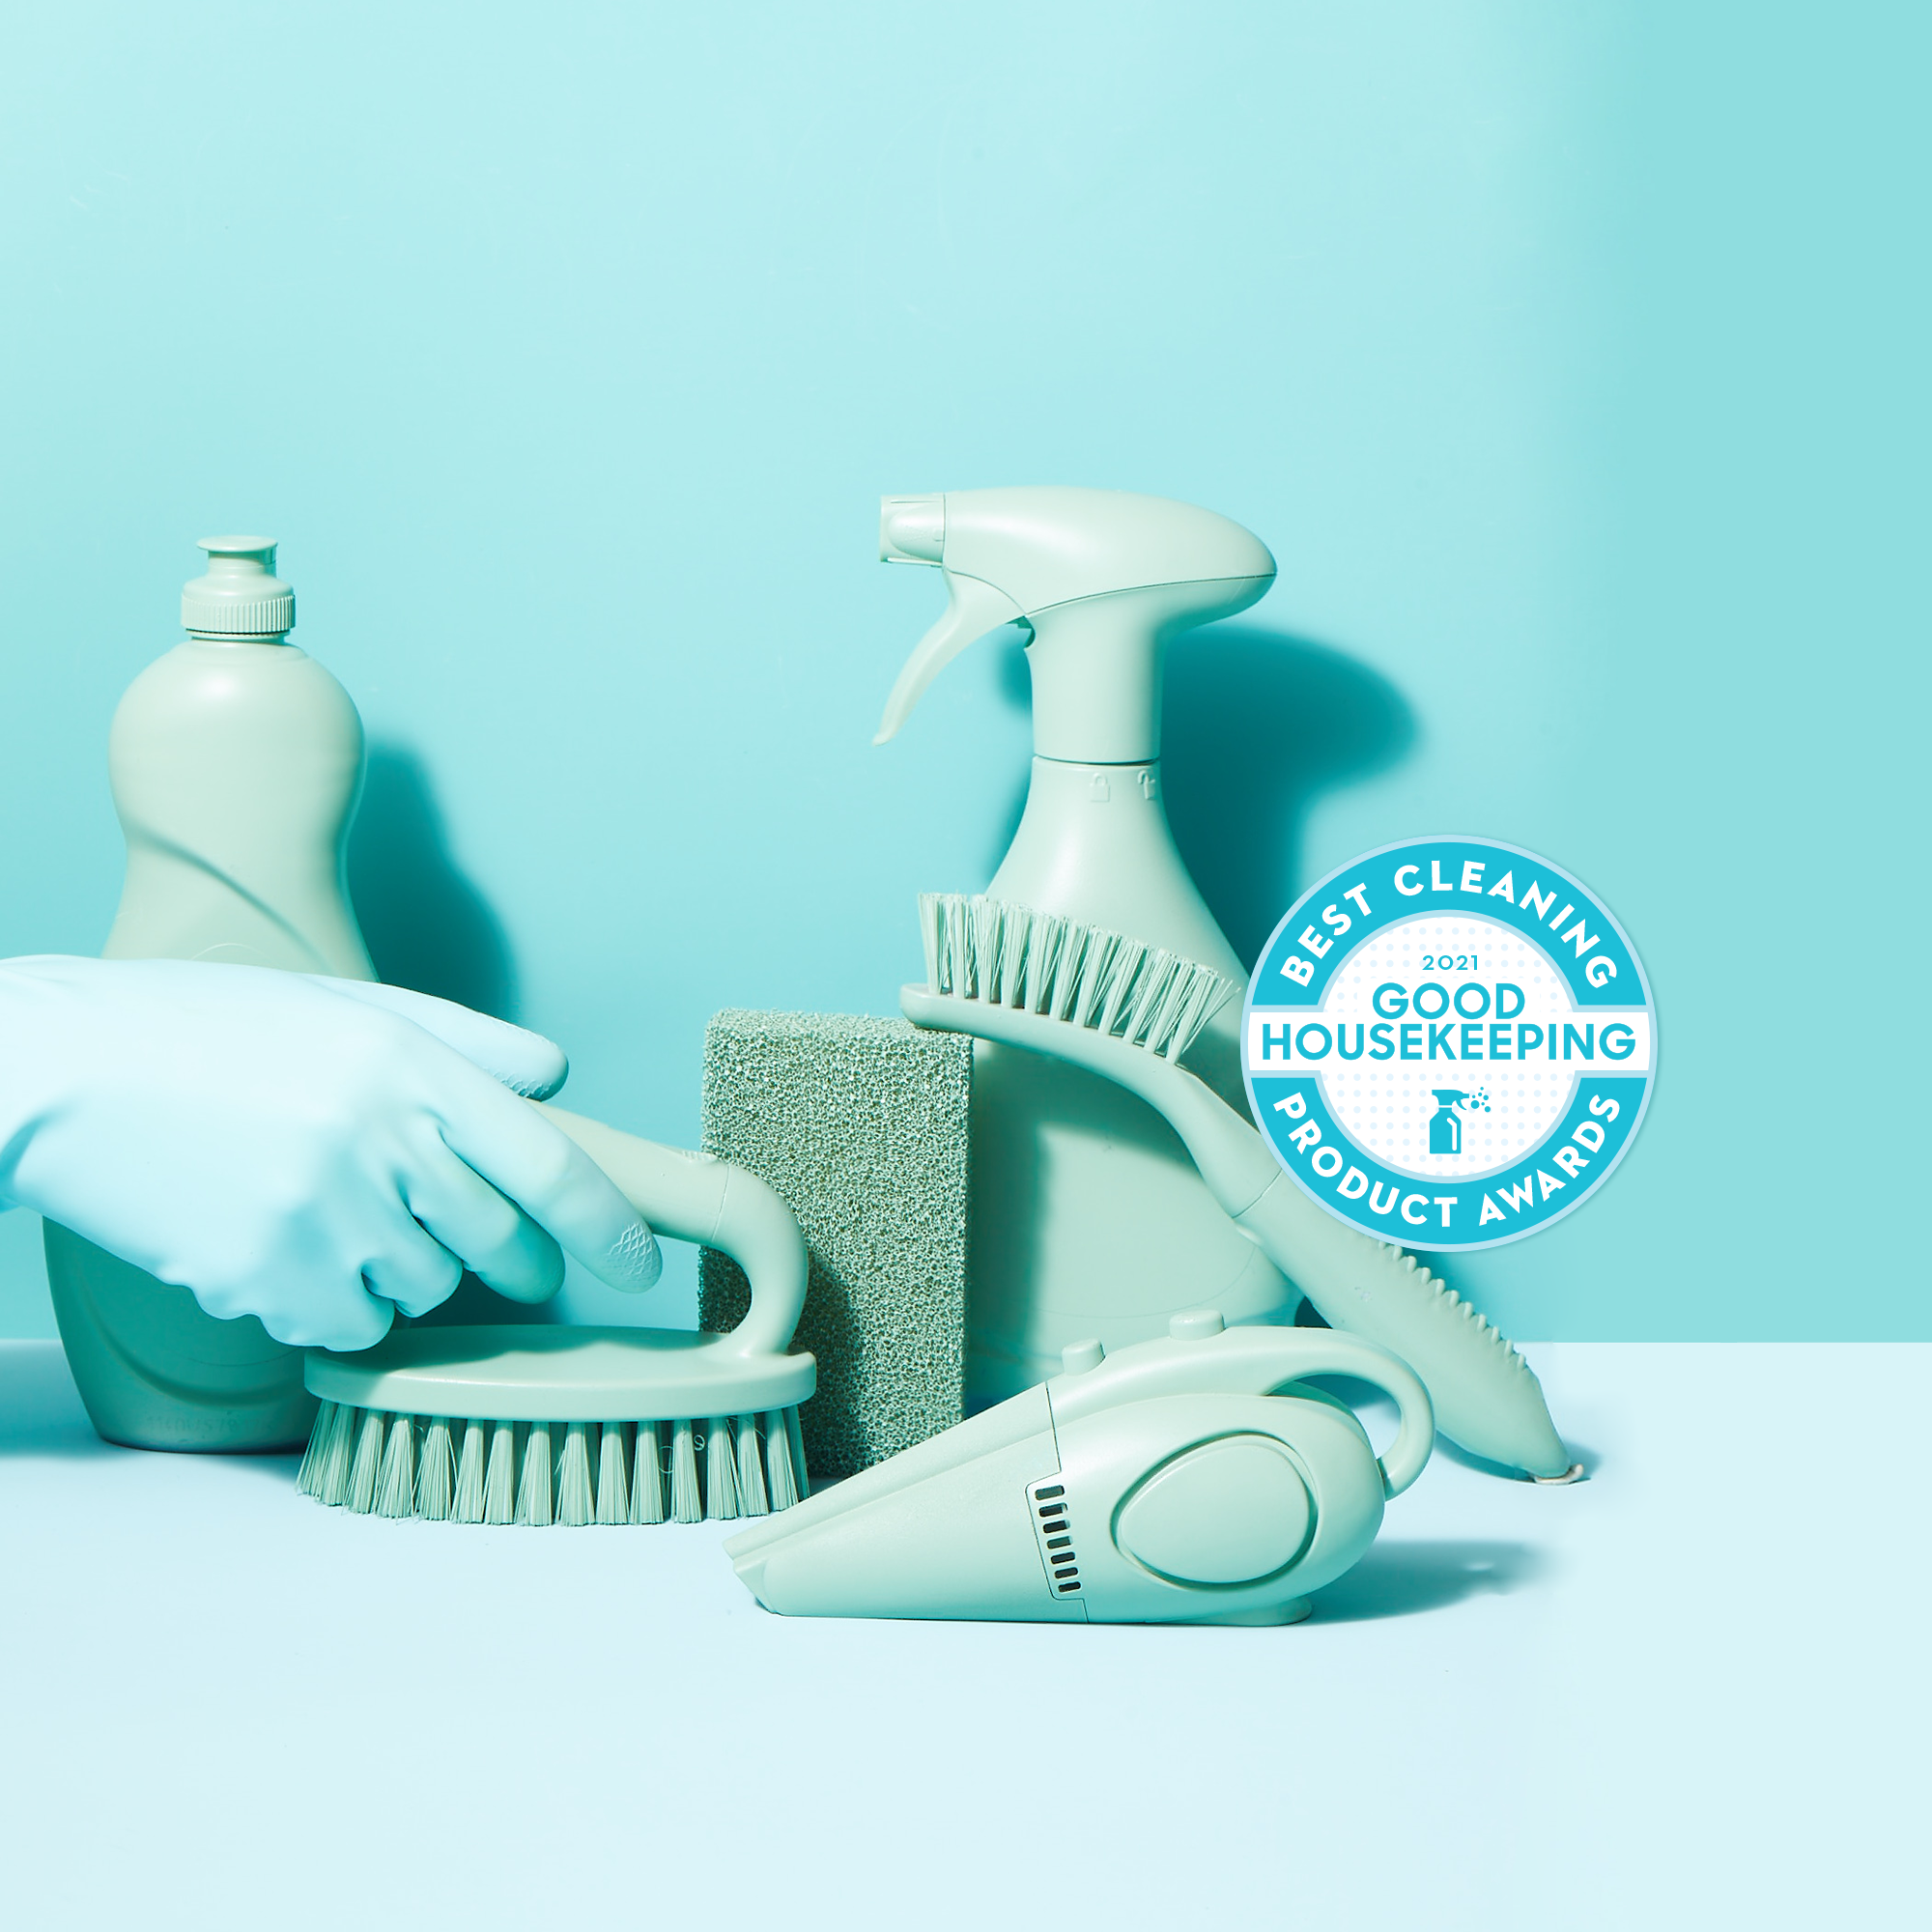 Good Housekeeping Cleaning Awards 2021 digmydogDesign